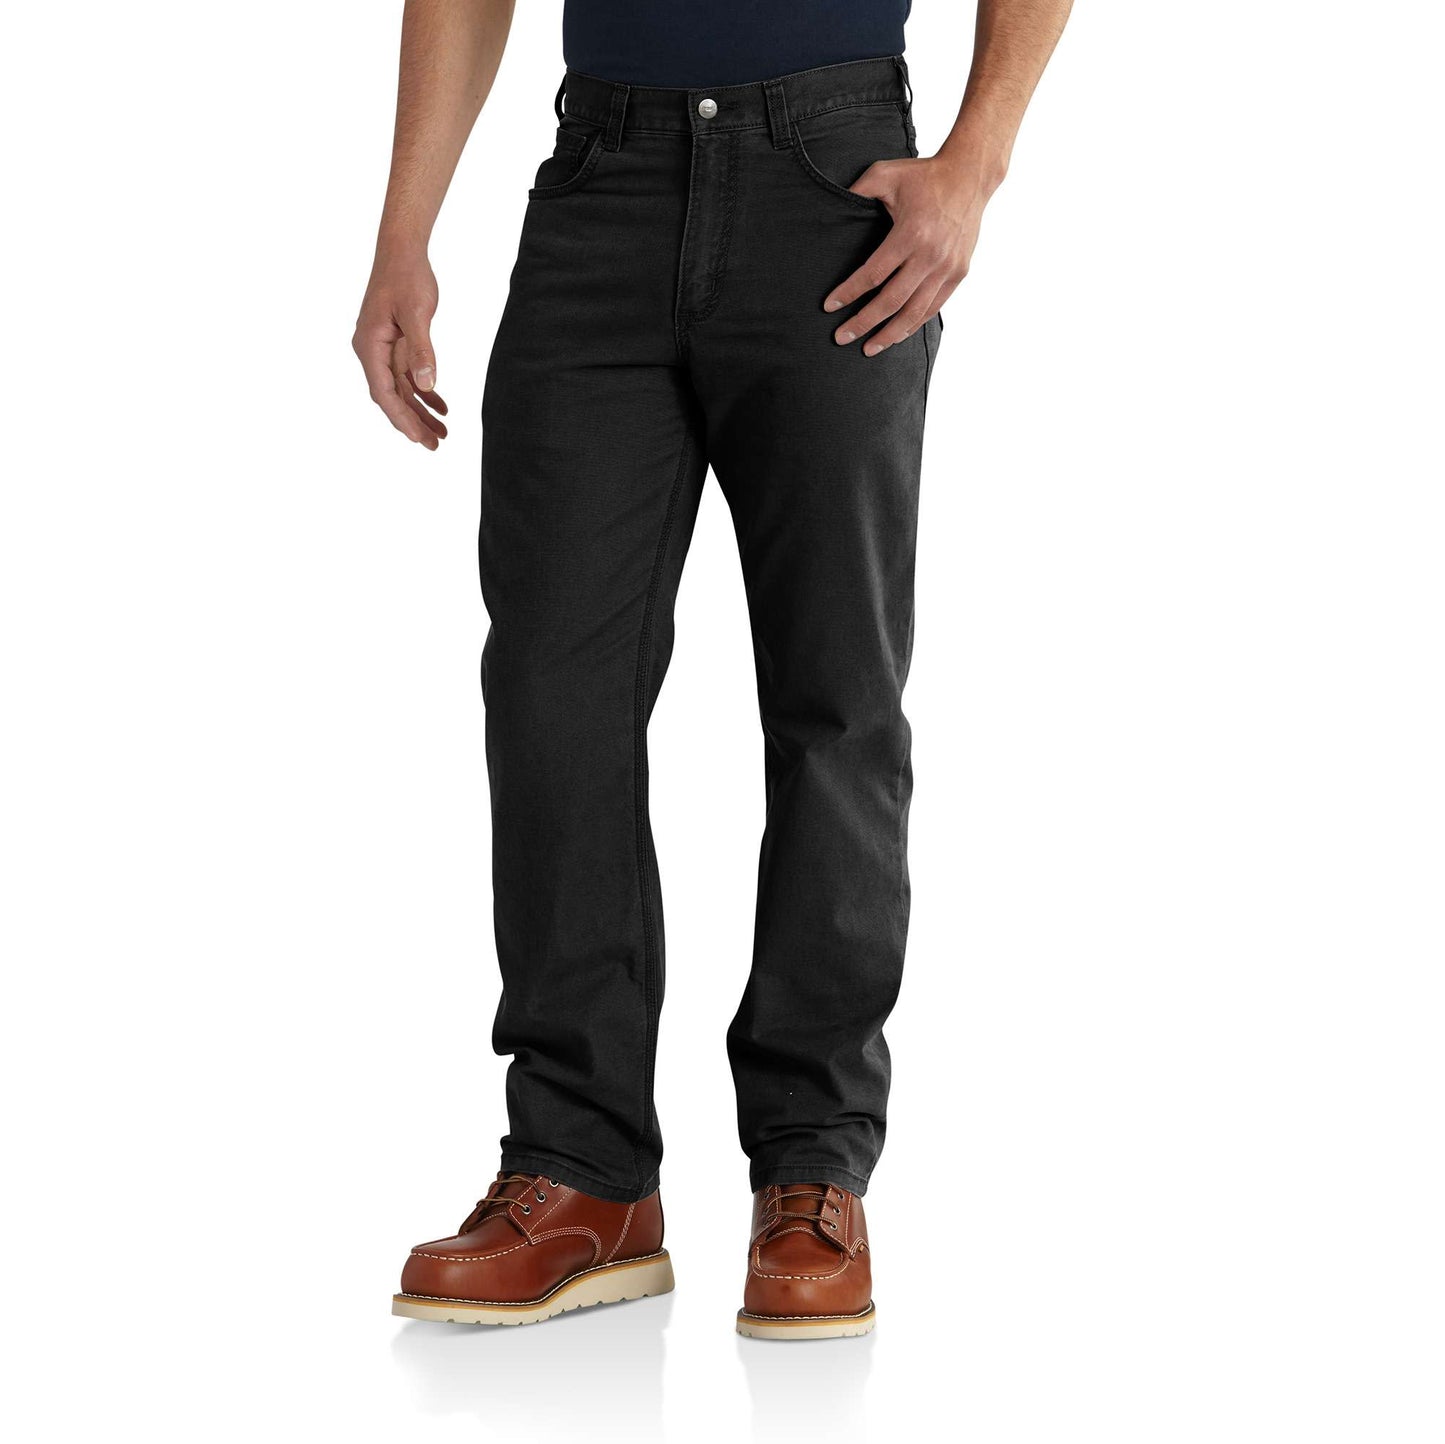 Carhartt Men's Rugged Flex Relaxed Fit Canvas 5-Pocket Work Pants